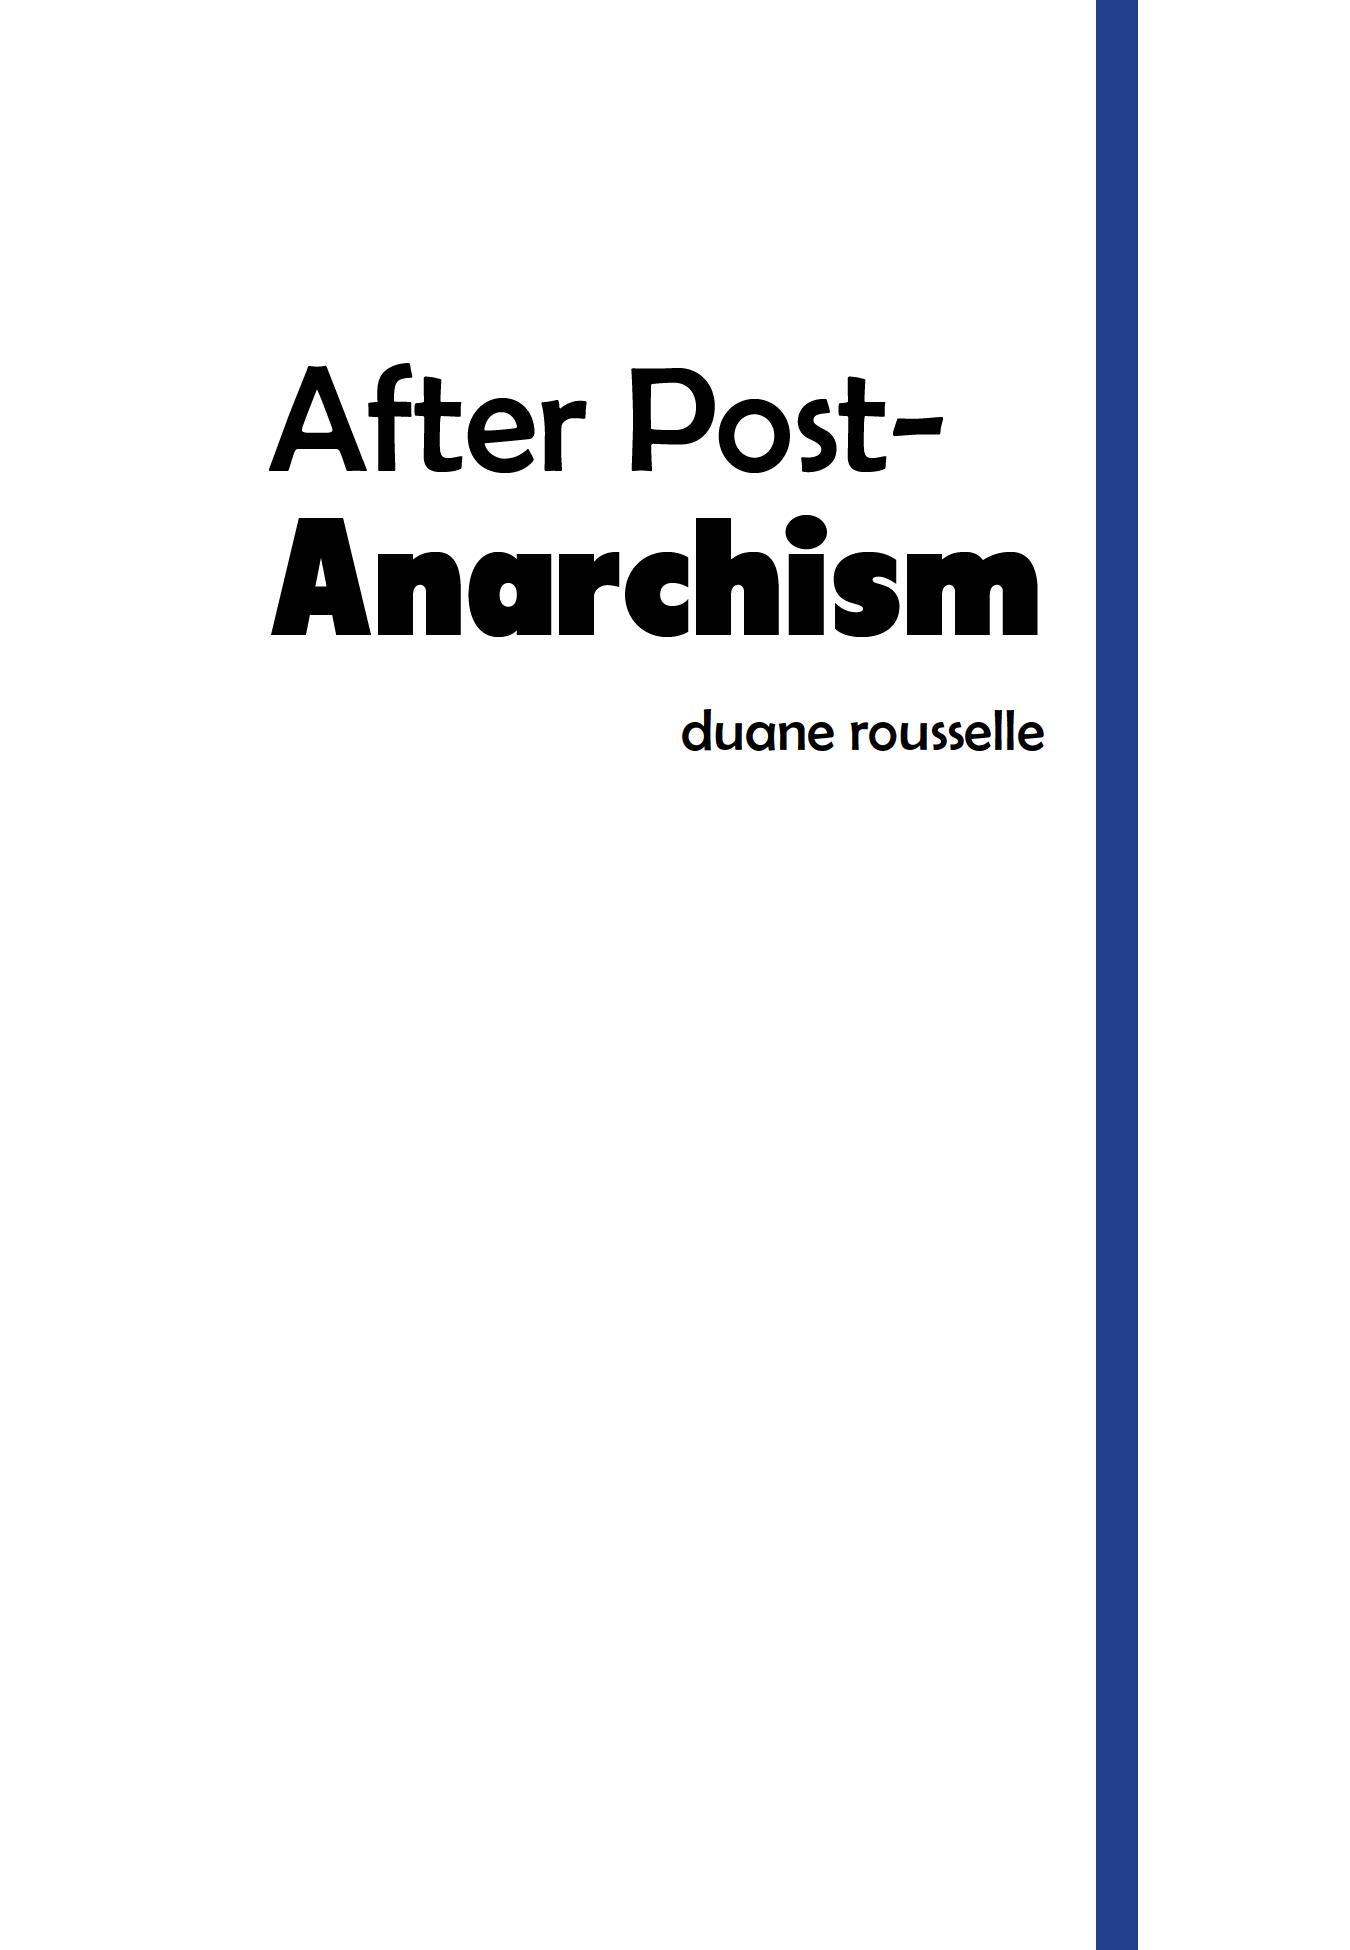 d-r-duane-rousselle-after-post-anarchism-5.jpg